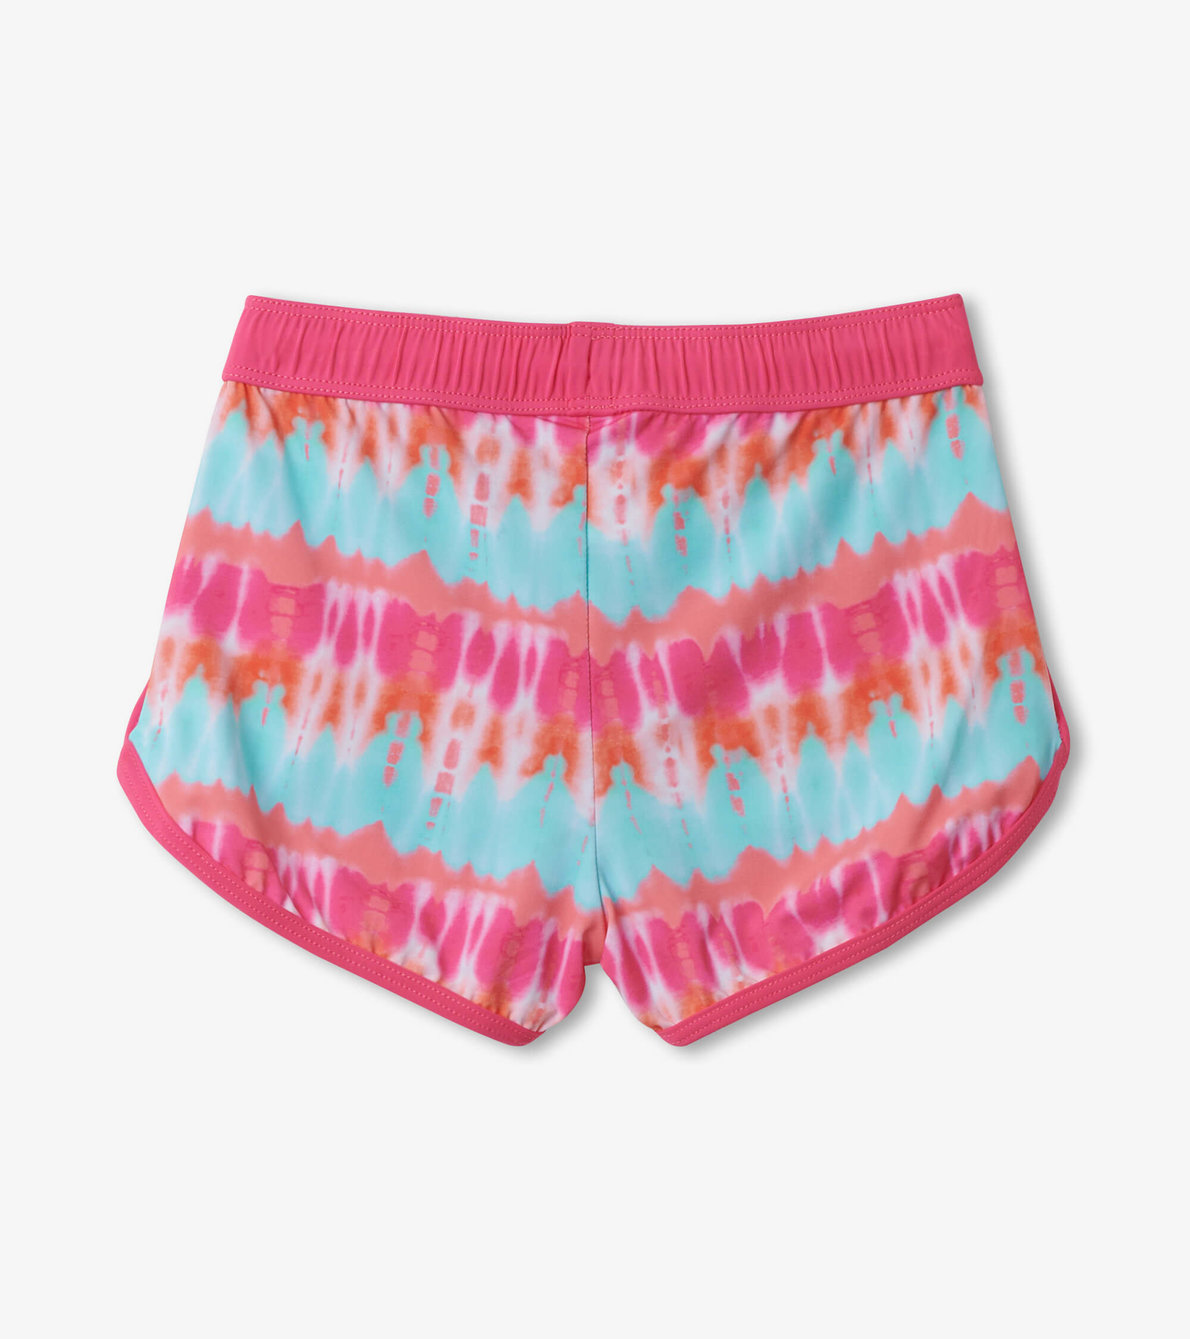 View larger image of Summer Tie Dye Swim Shorts